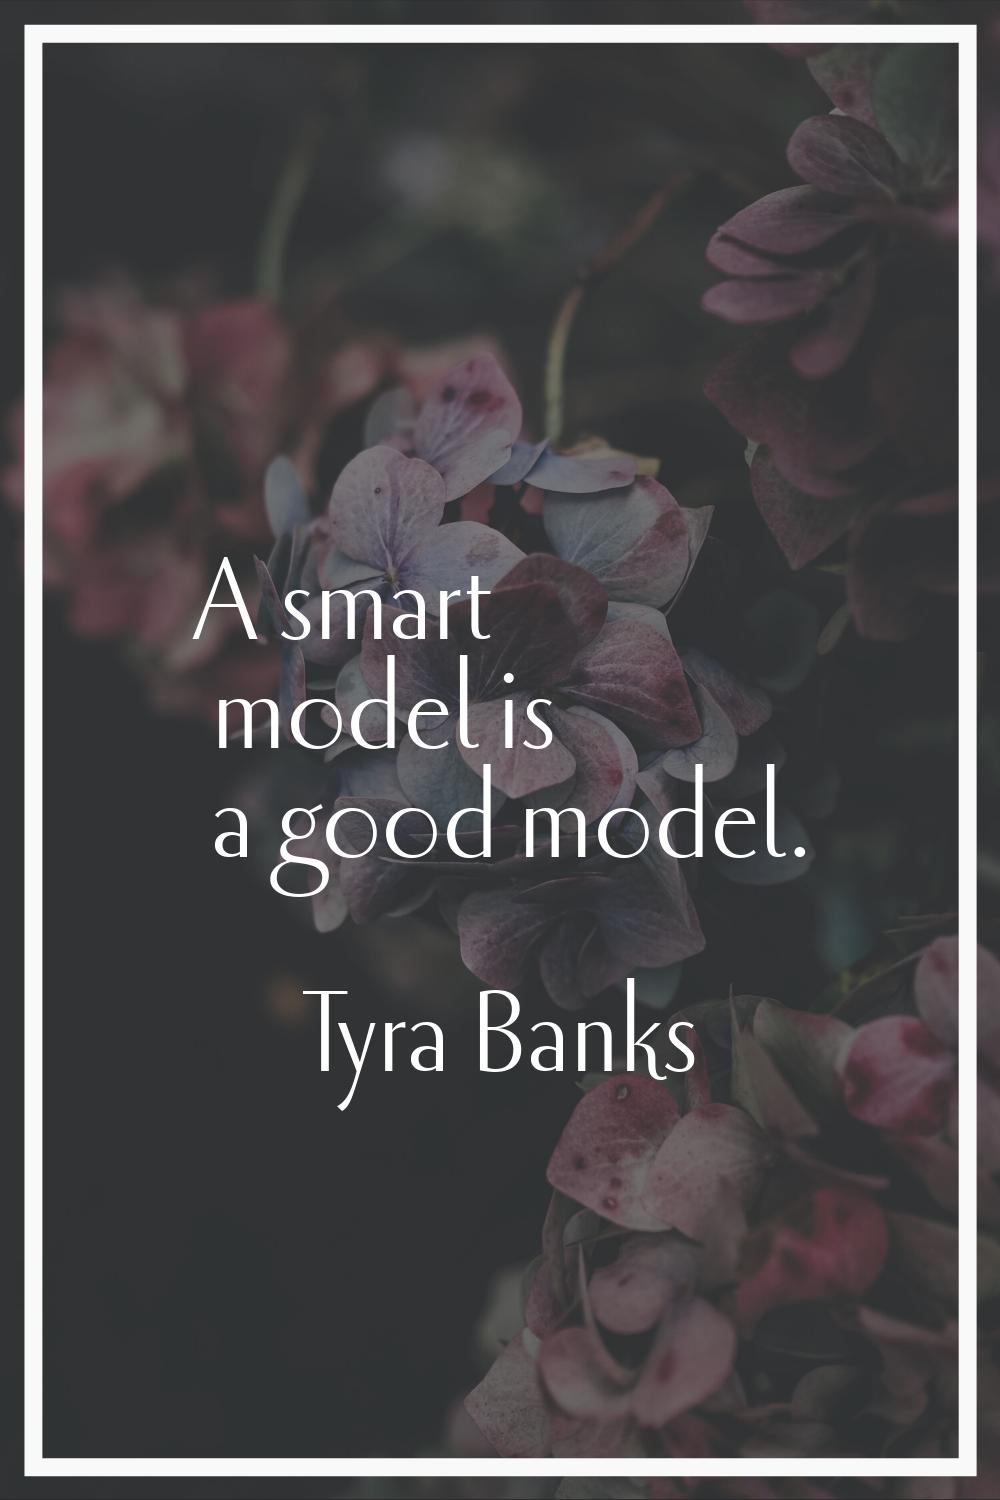 A smart model is a good model.